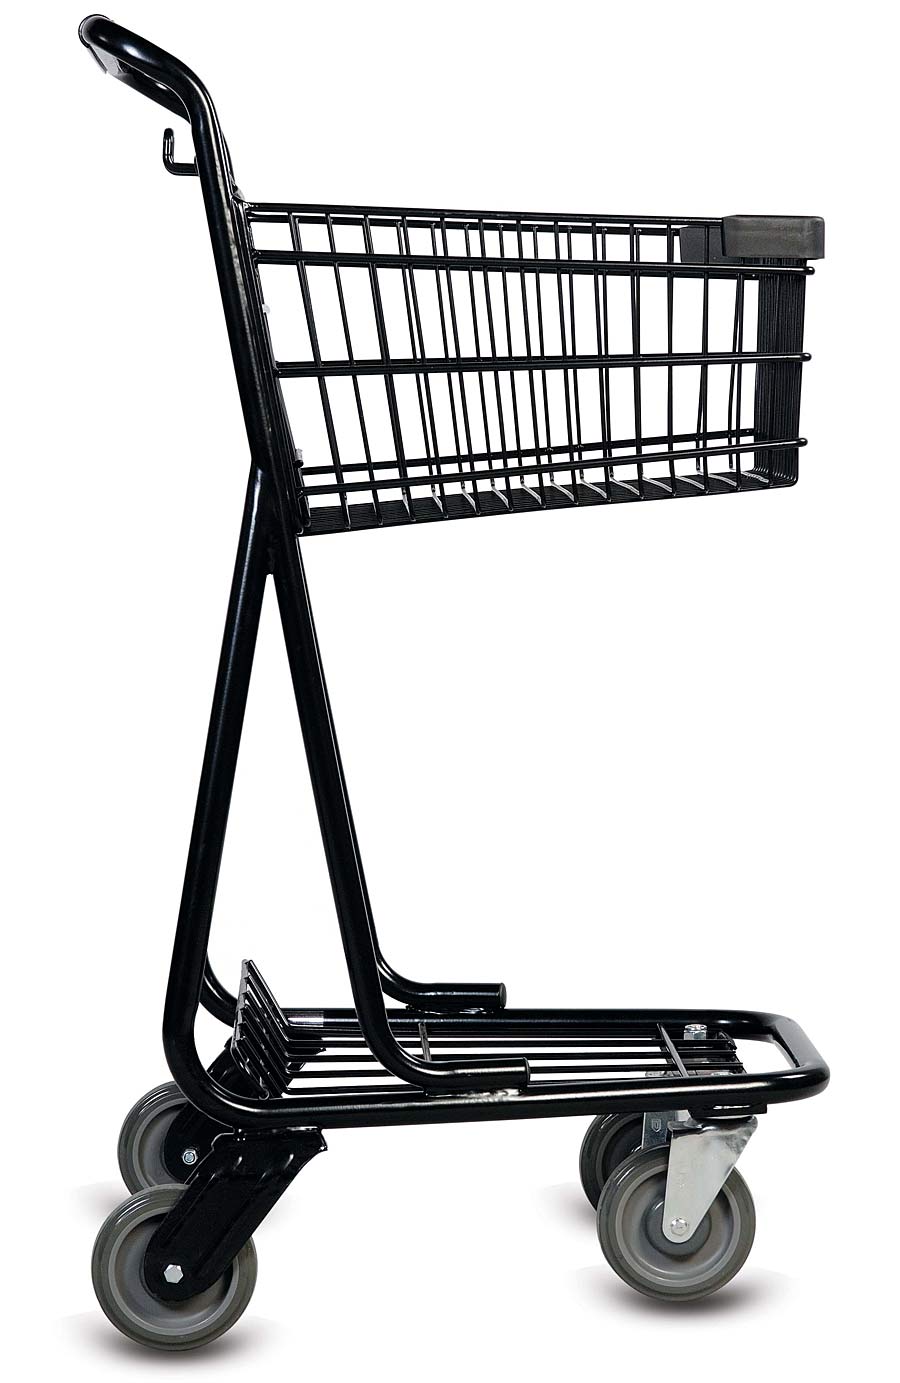 EXpress3540 Metal Shopping Cart, Utility Cart, Stocking Cart